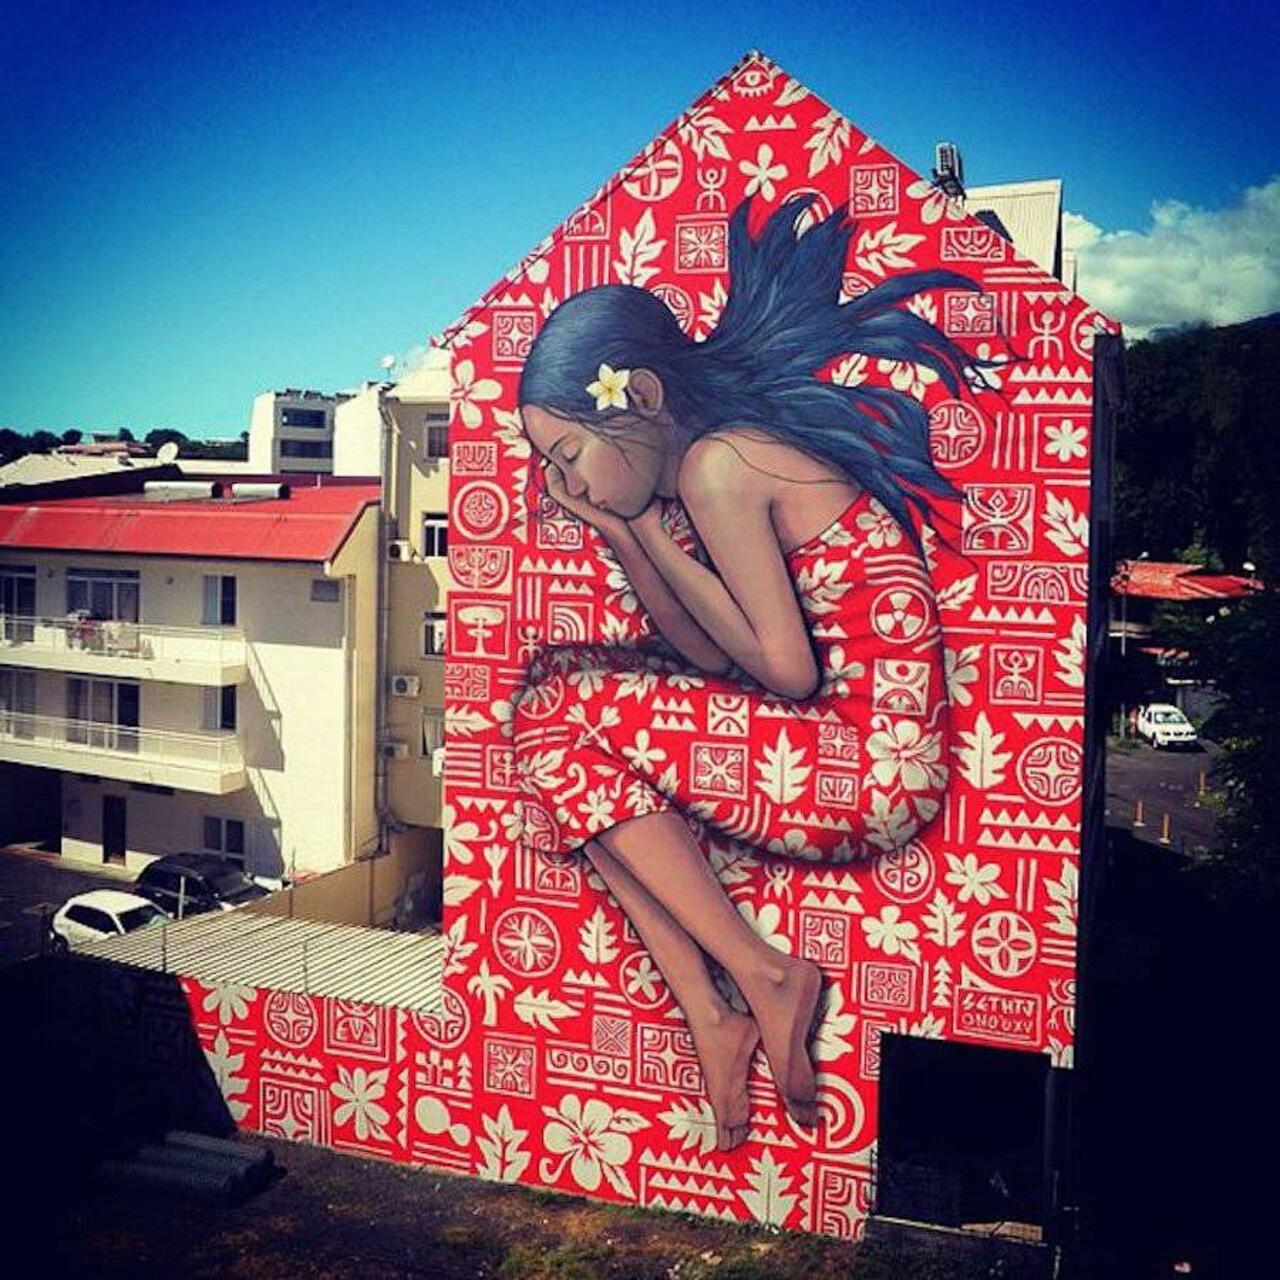 RT @ArtMuse79: Seth Globepainter
#graffiti #streetart #artmuse #گرافیتی http://t.co/cGjnQeTXM9